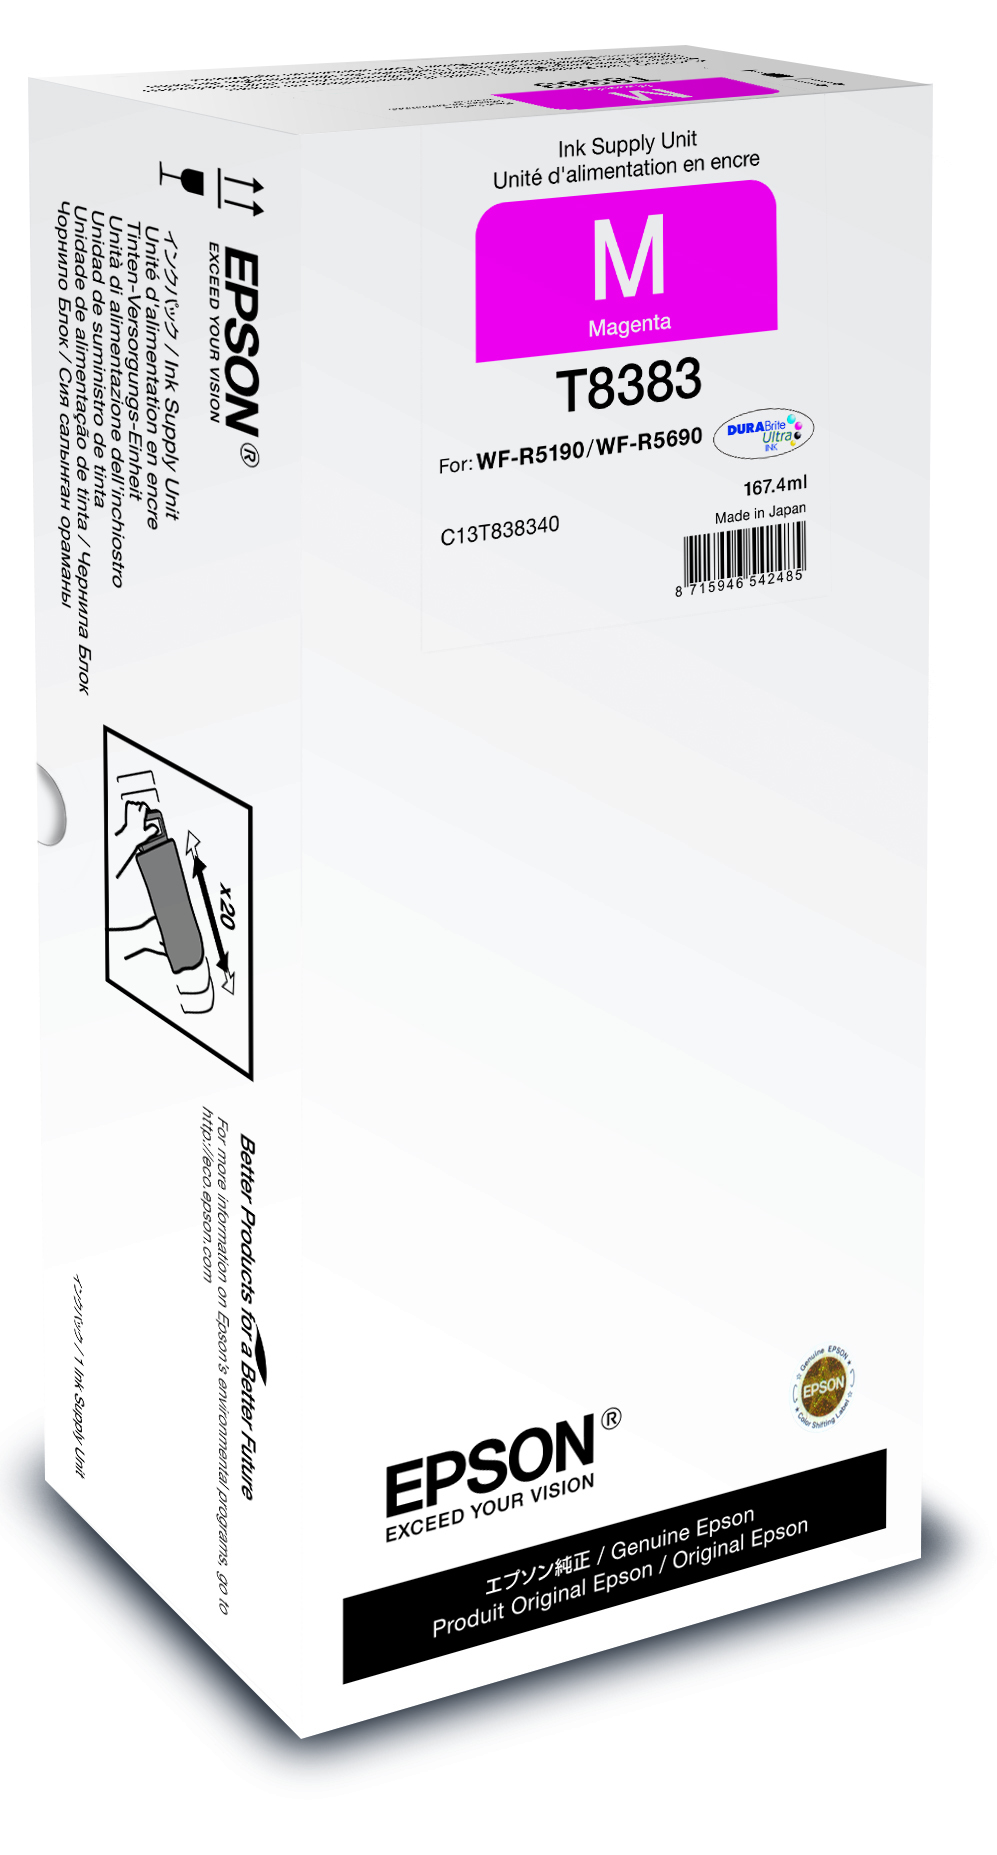 Epson Magenta XL Ink Supply Unit single pack / magenta